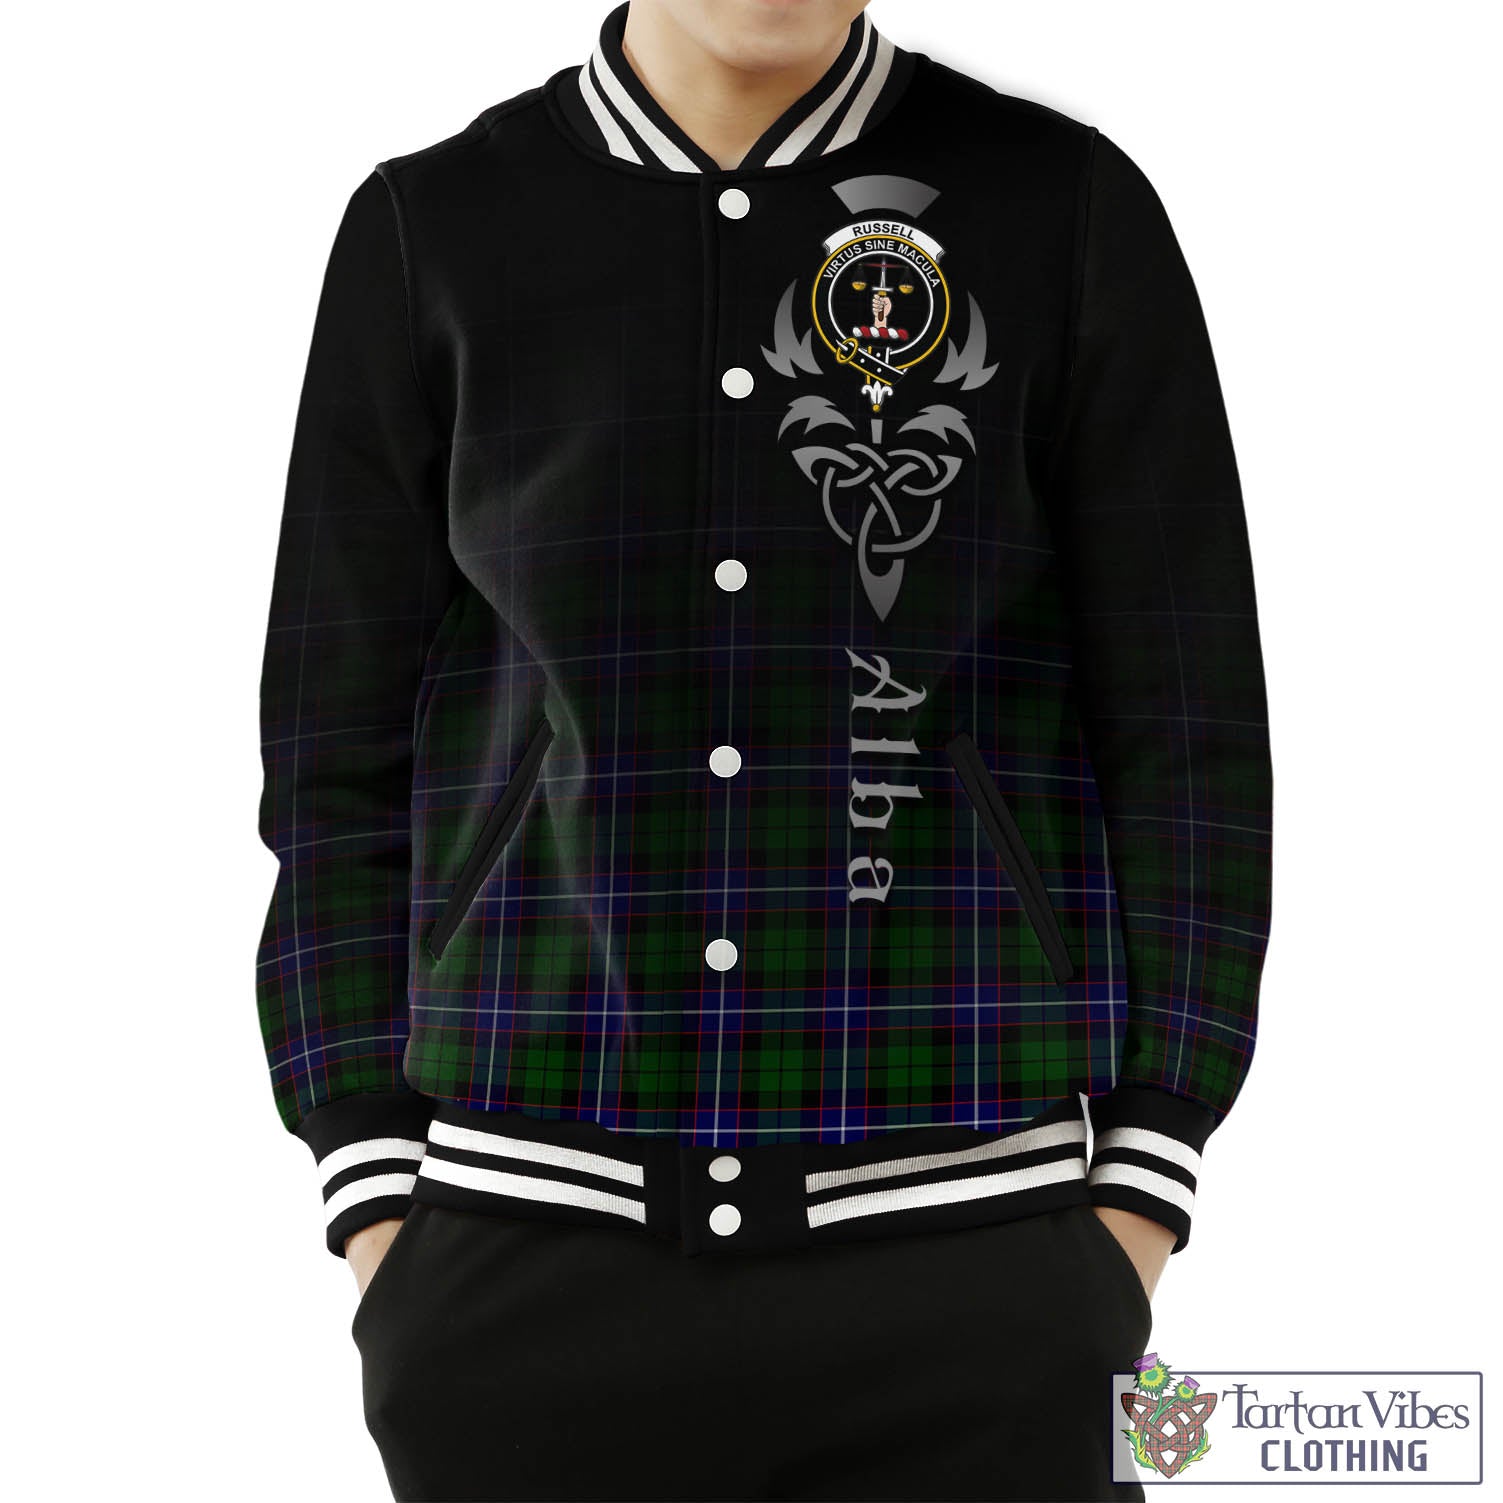 Tartan Vibes Clothing Russell Modern Tartan Baseball Jacket Featuring Alba Gu Brath Family Crest Celtic Inspired